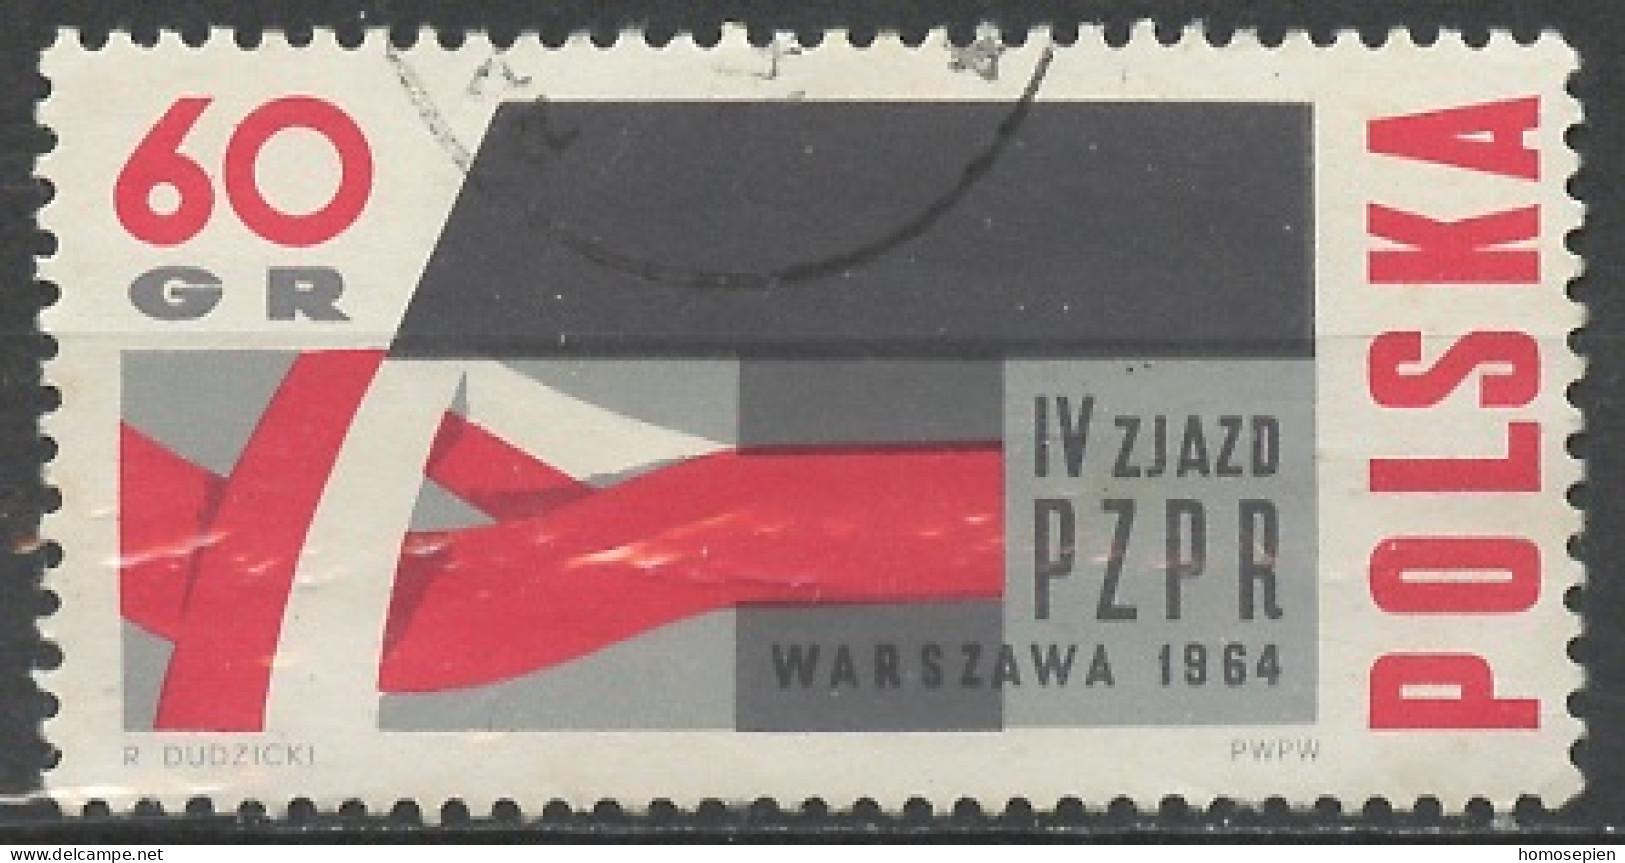 Pologne - Poland - Polen 1964 Y&T N°1357 - Michel N°1500 (o) - 60g Drapeau Et Marteau - Used Stamps